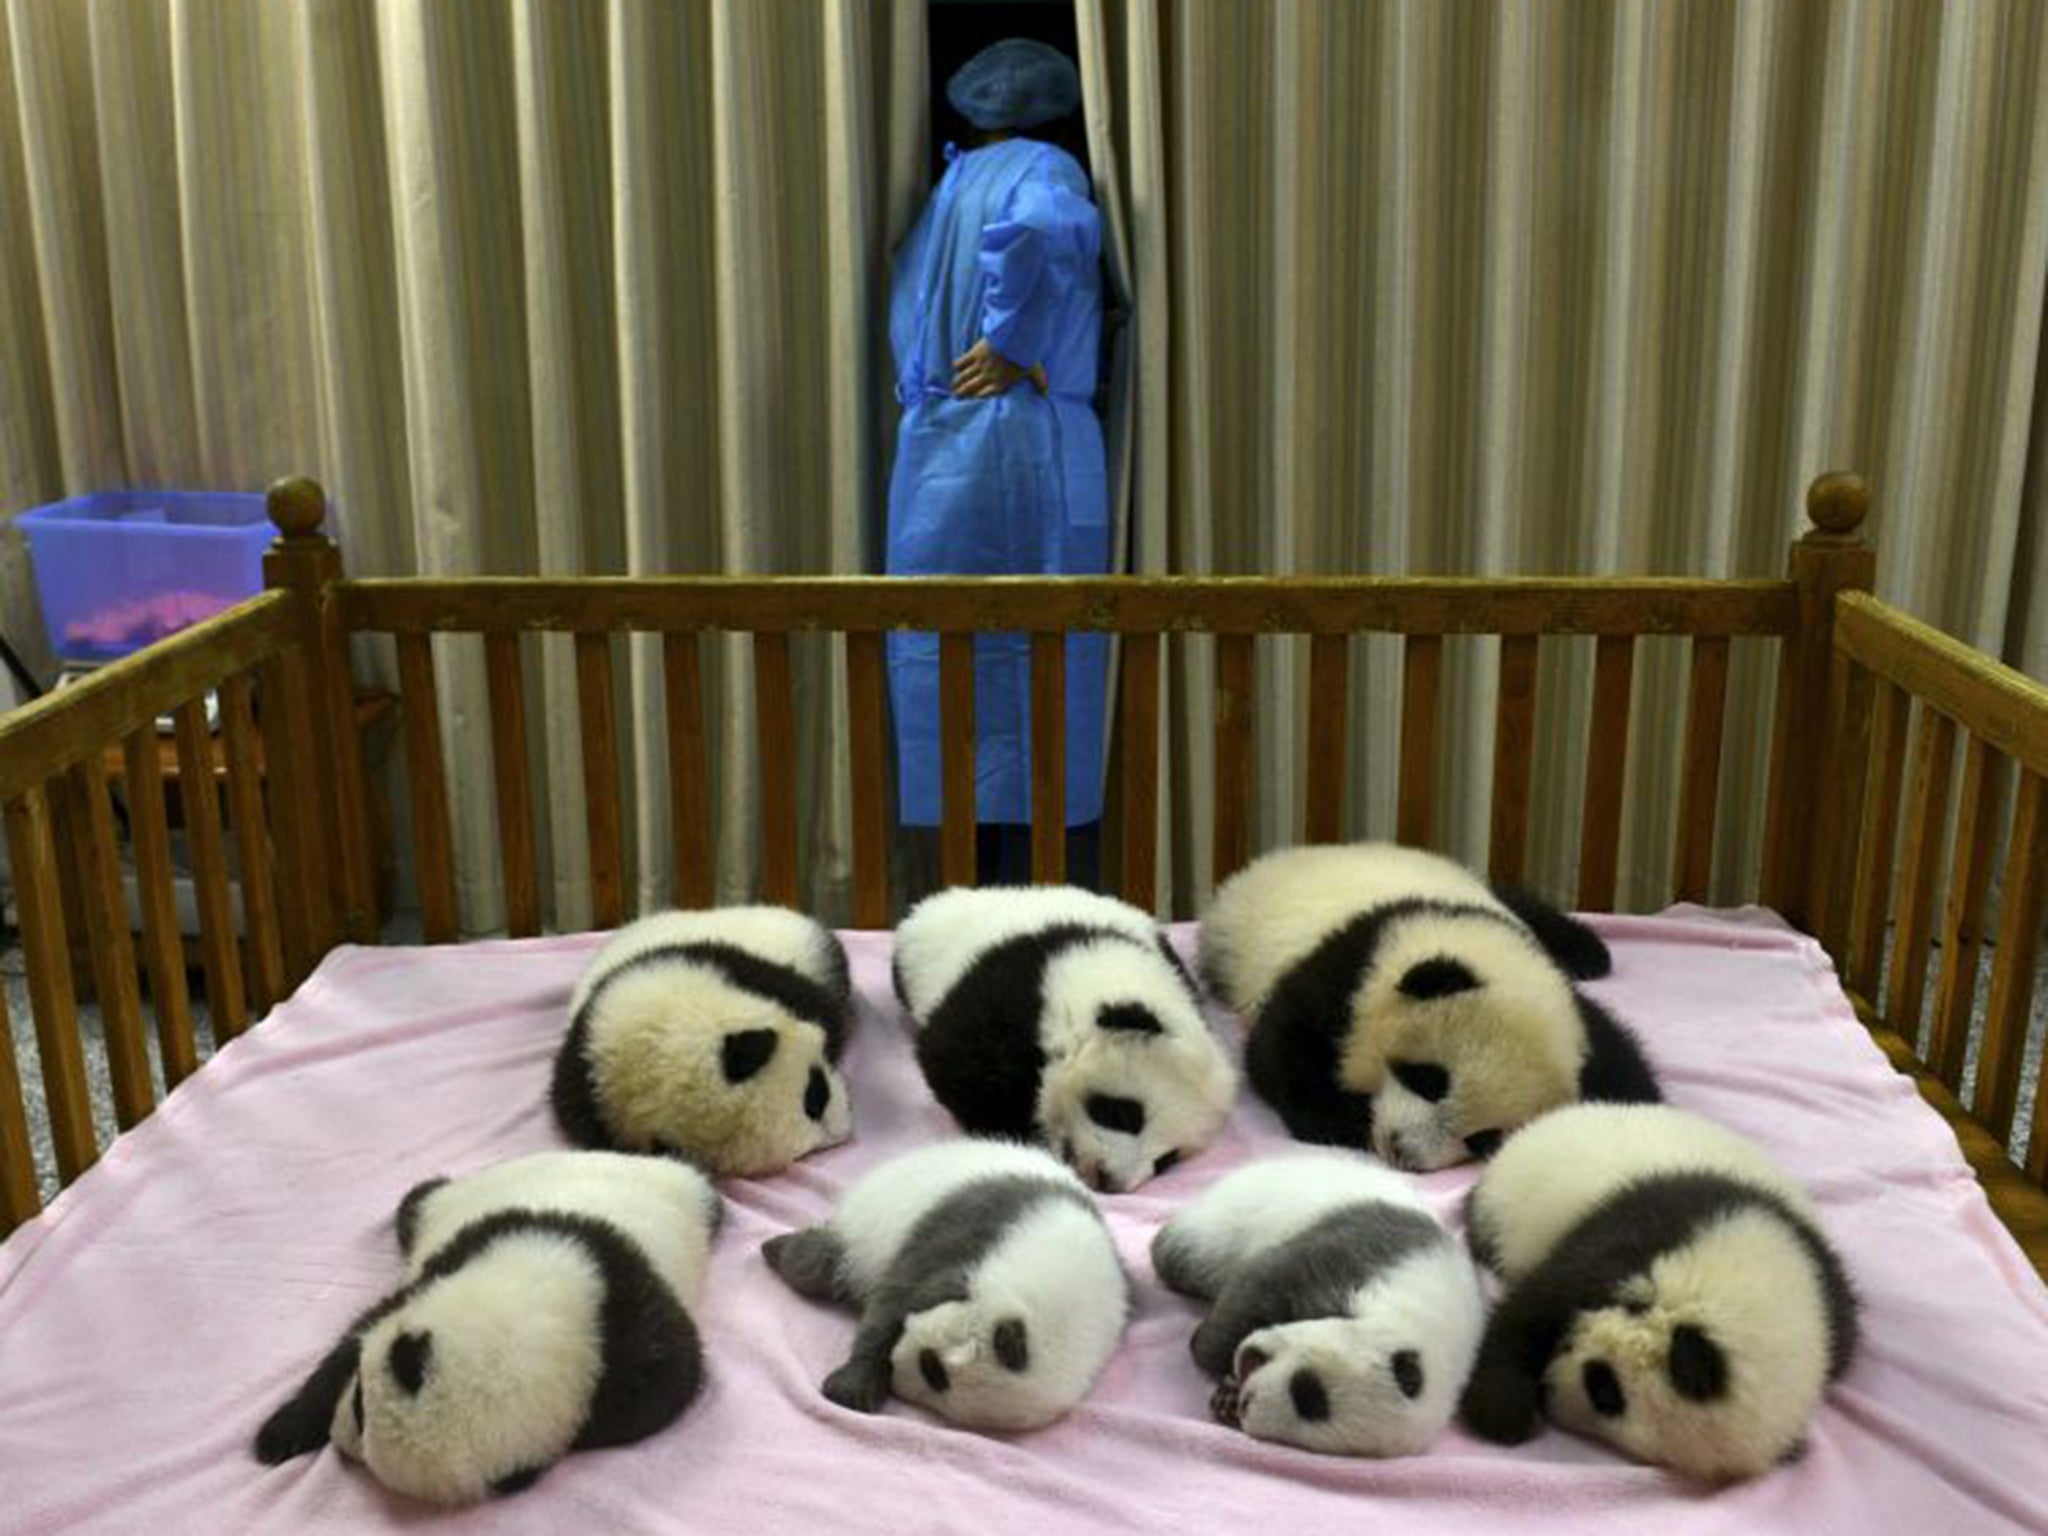 Panda cubs born in captivity in 2012 at the Chengdu Panda Base in China